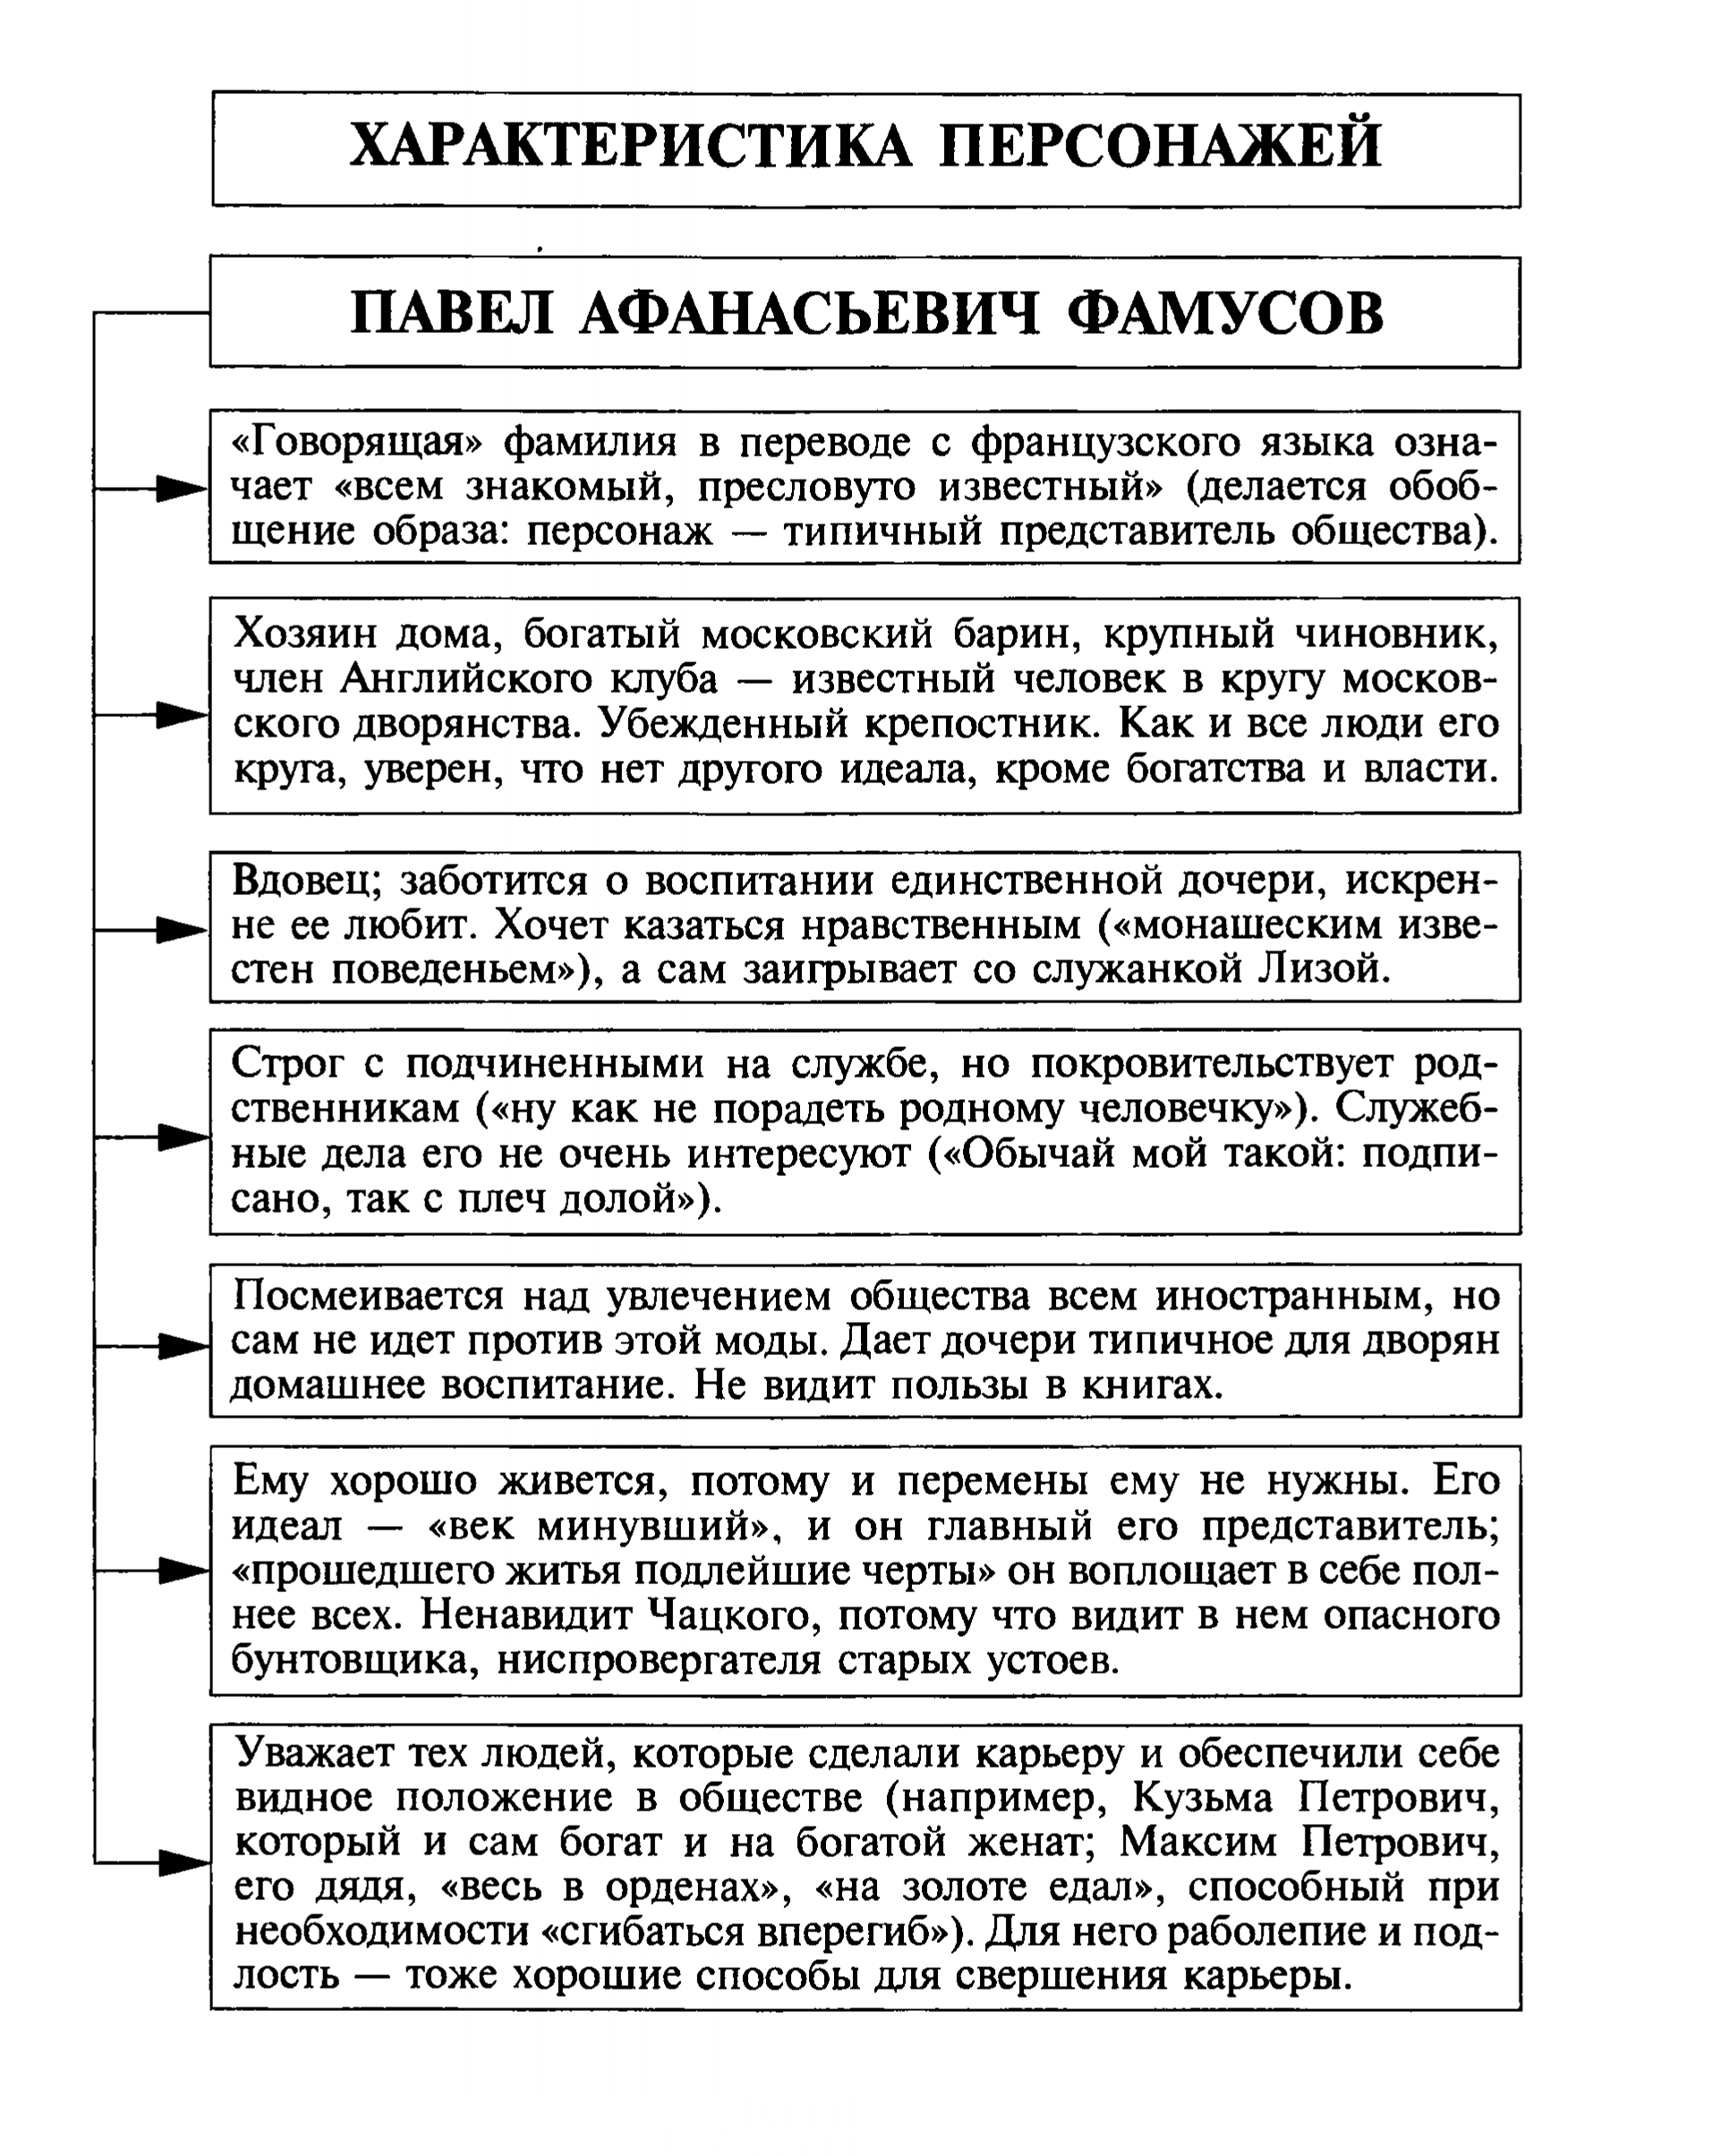 Фамусов - характеристика персонажа (таблица)